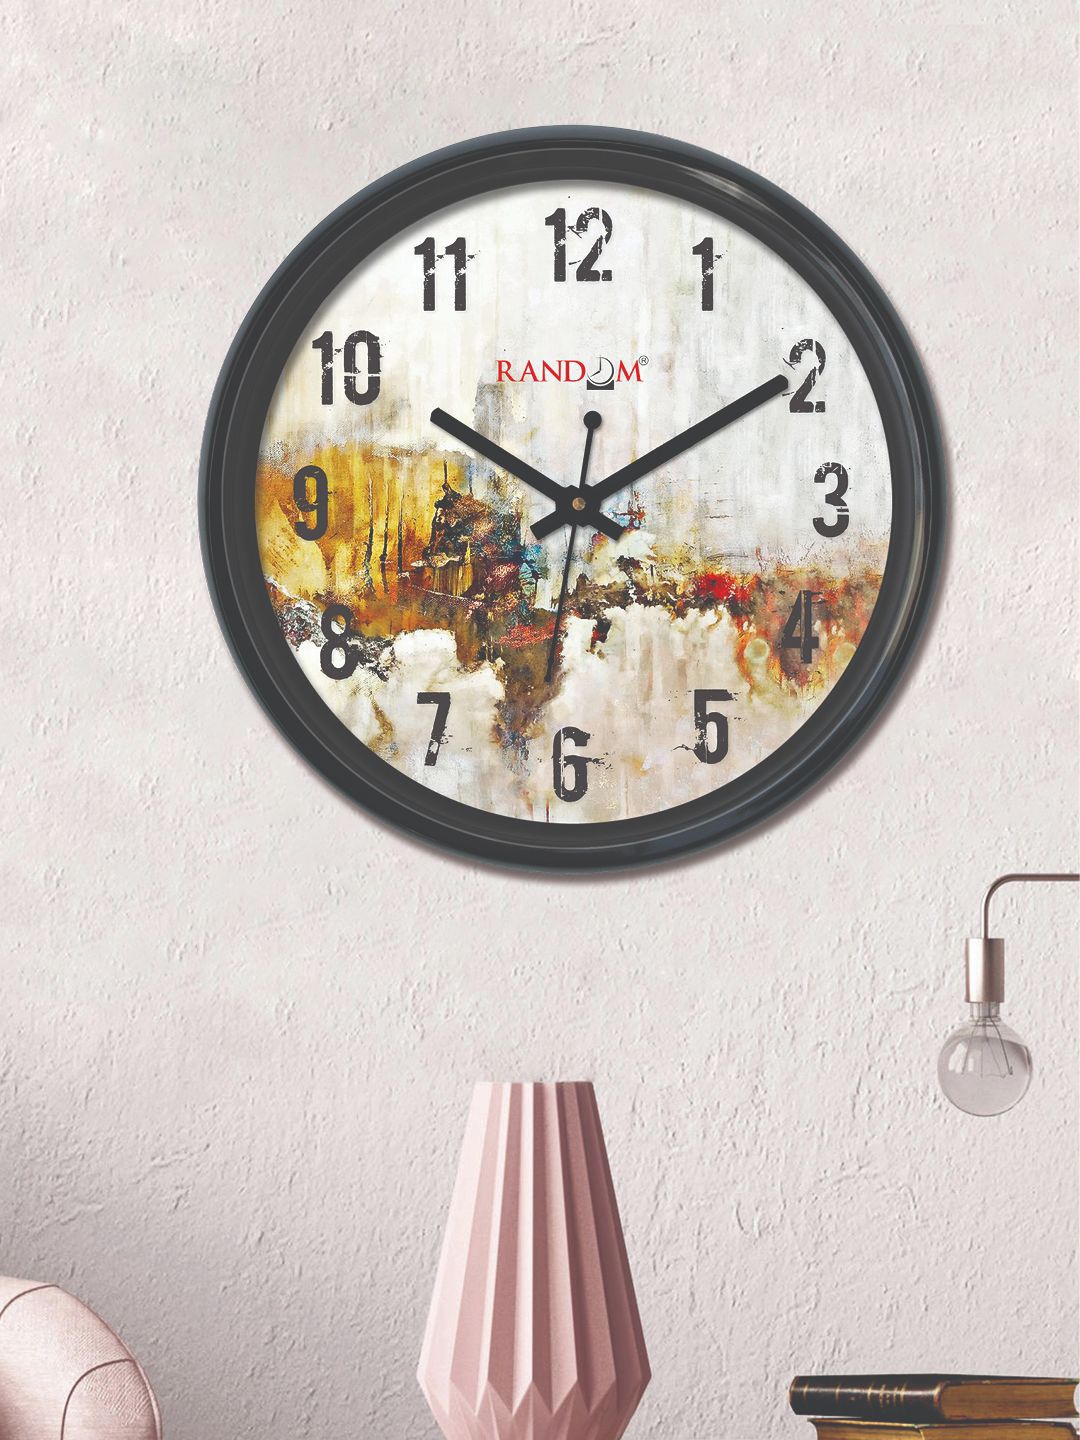 RANDOM Off-White & Mustard Yellow Round Printed Analogue Wall Clock (30 cm x 30 cm) Price in India